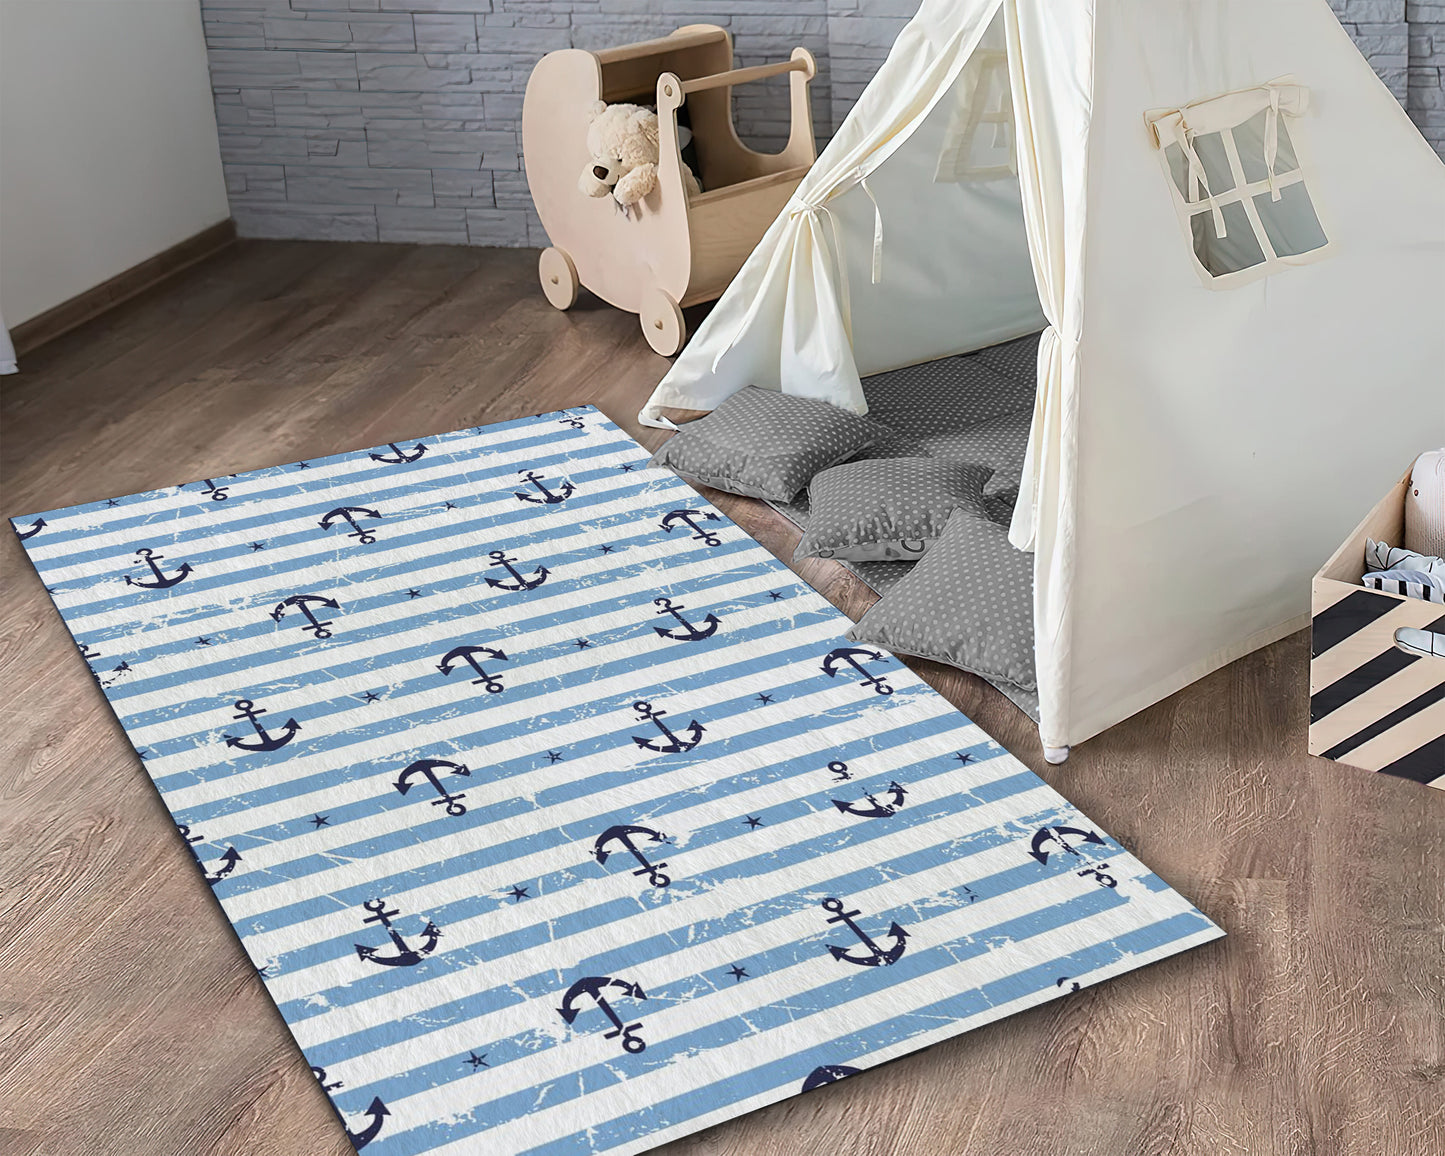 Sea Anchor Rug, Boys Room Rug, Striped Pattern Carpet, Nursery Play Room Mat, Baby Gift